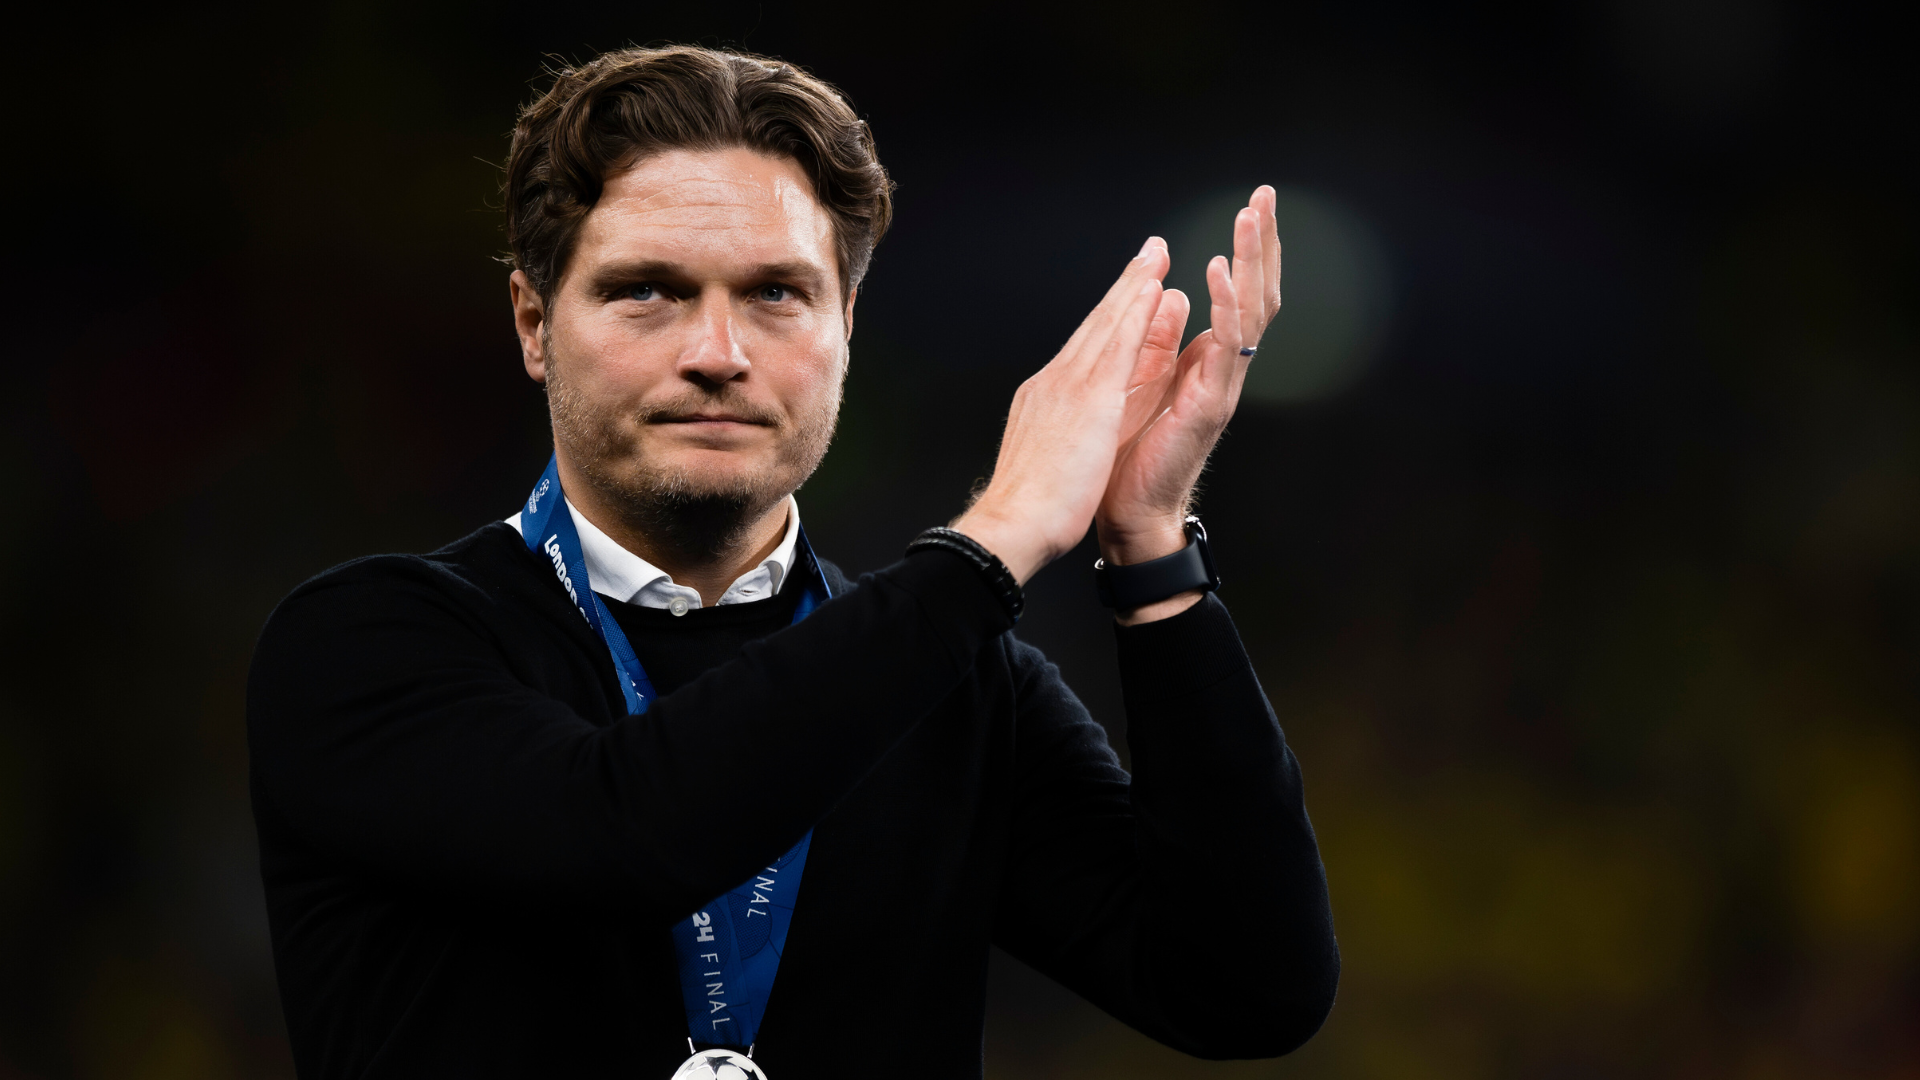 Terzic leaves Borussia Dortmund